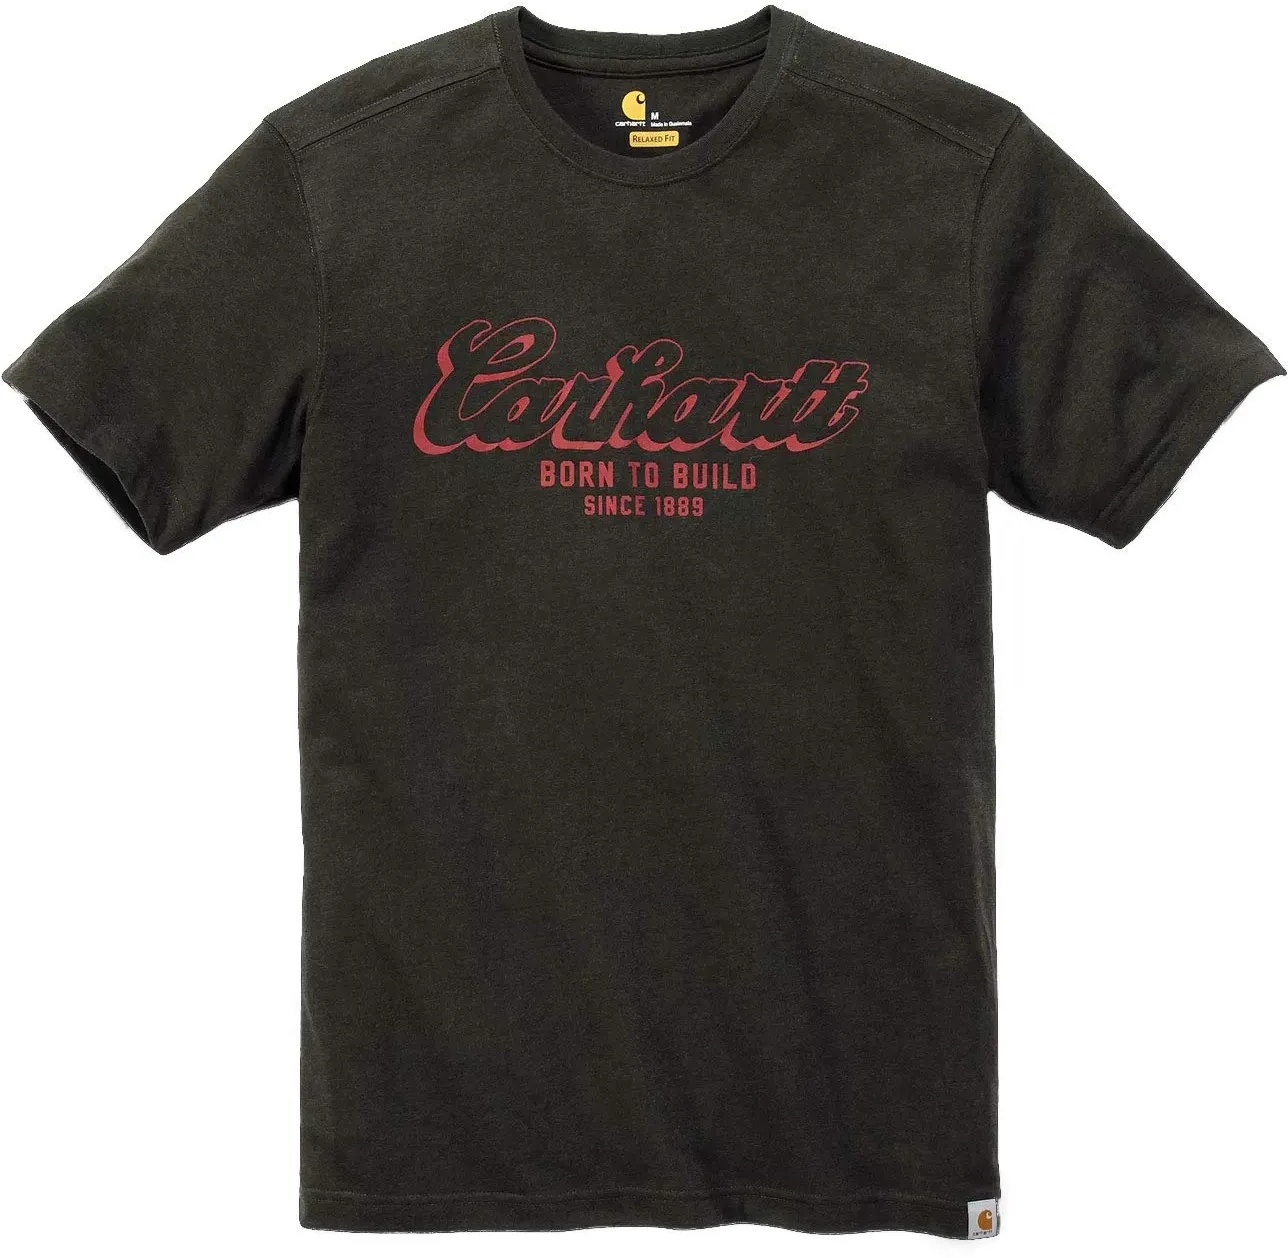 carhartt t-shirt maddock